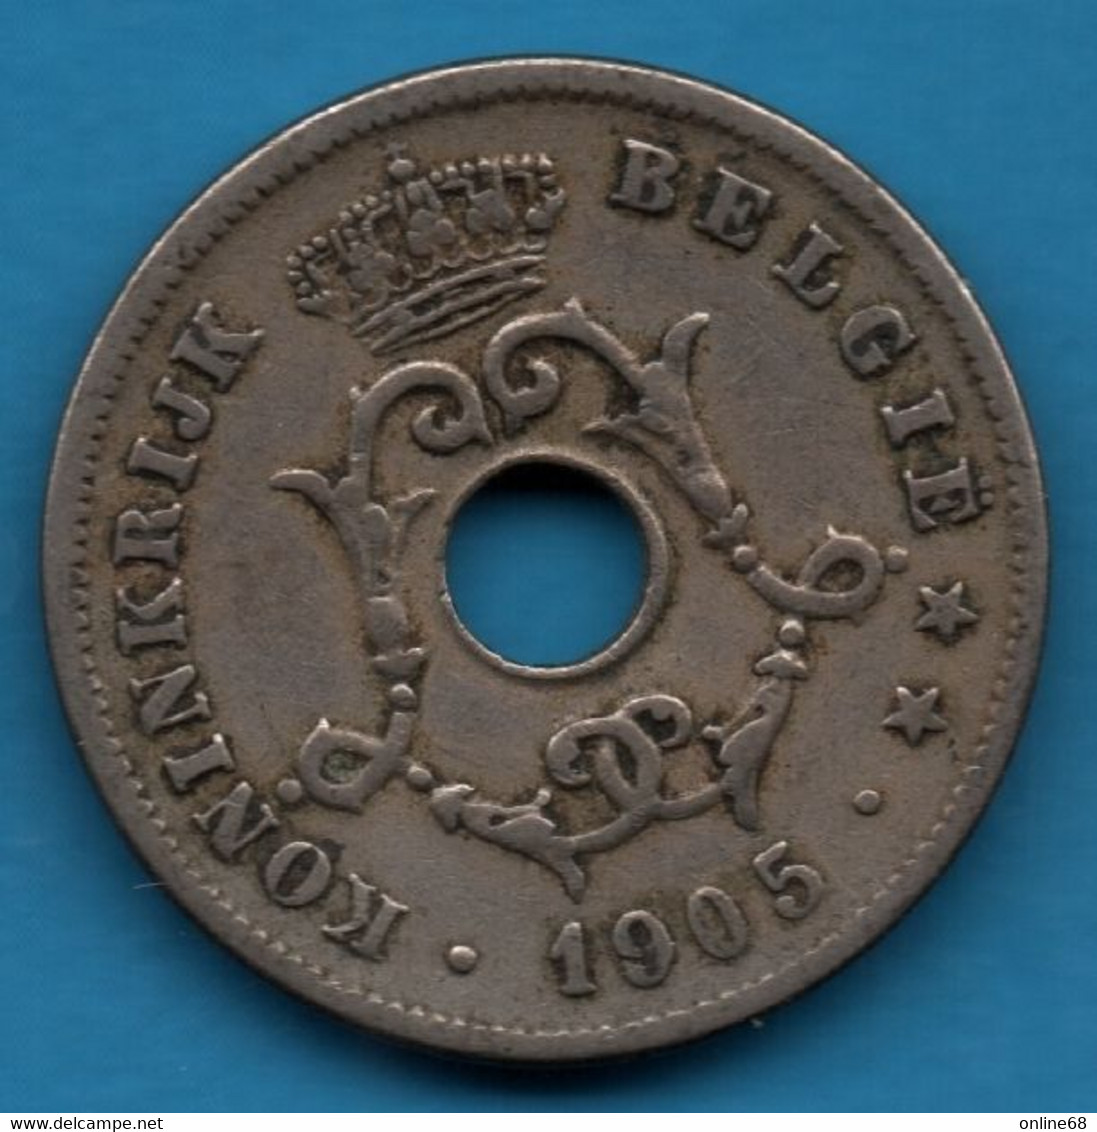 BELGIË 10 CENTIMES 1905 KM# 53 Léopold II - 10 Cent